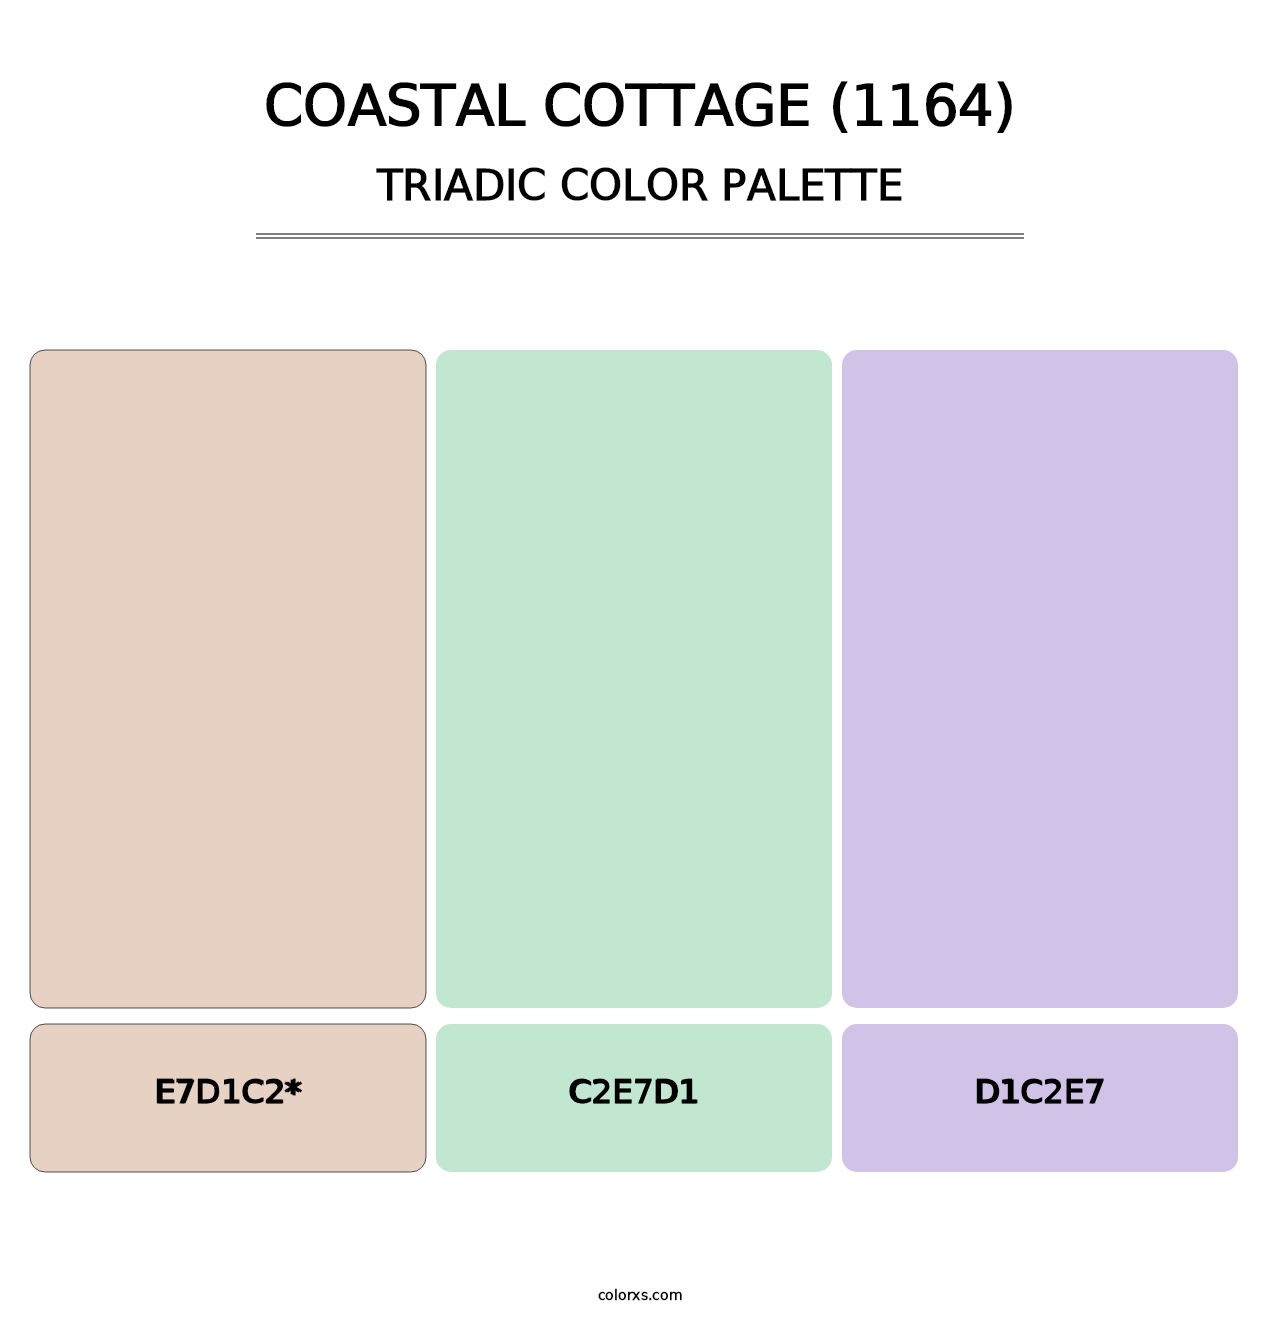 Coastal Cottage (1164) - Triadic Color Palette